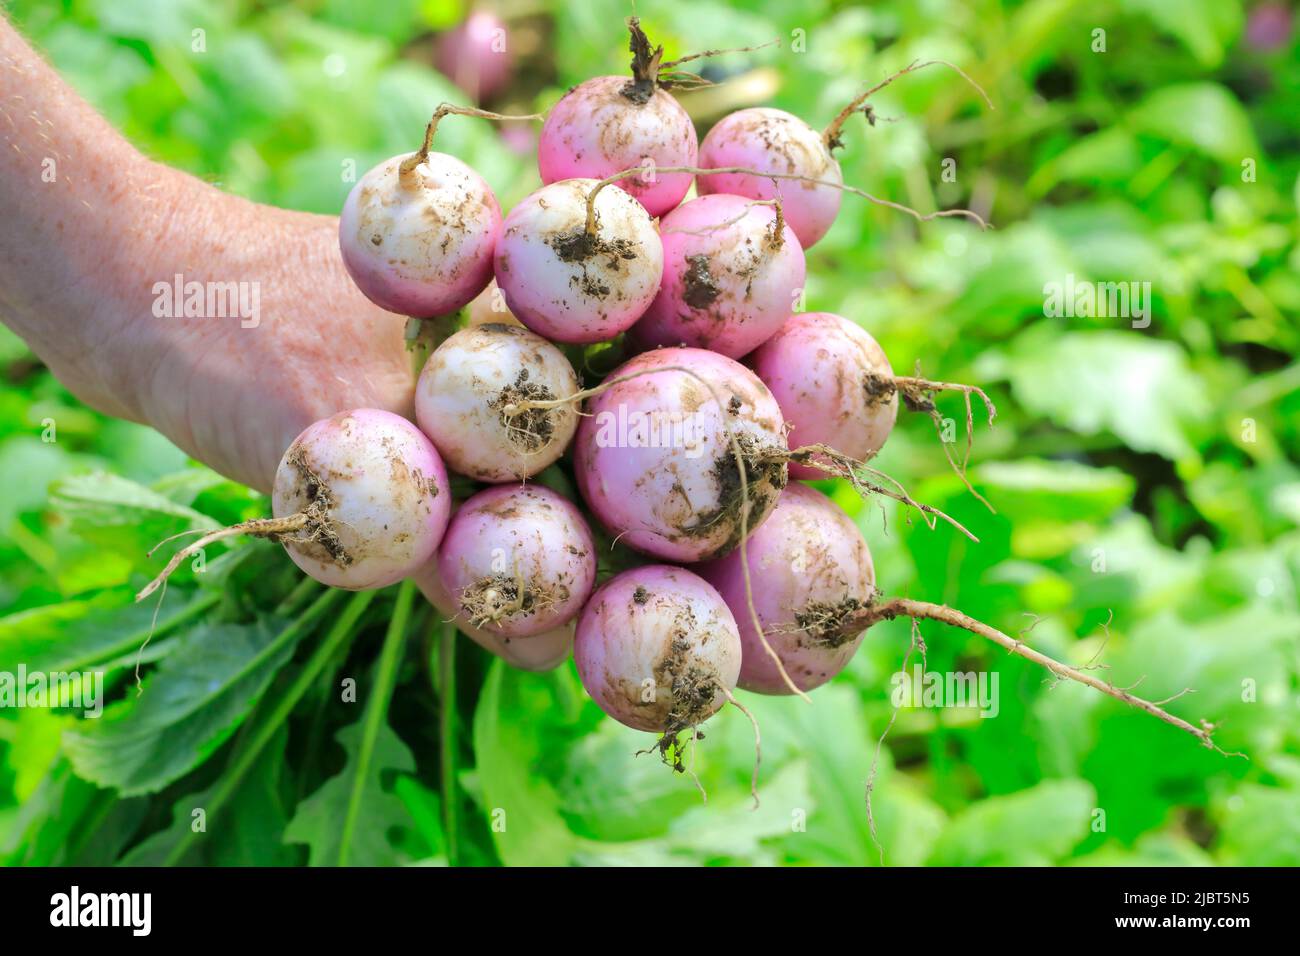 France, Loire Atlantique, Nantes Metropole, Les Sorinieres, organic market gardening by Olivier Durand, harvest of kabu turnips Stock Photo